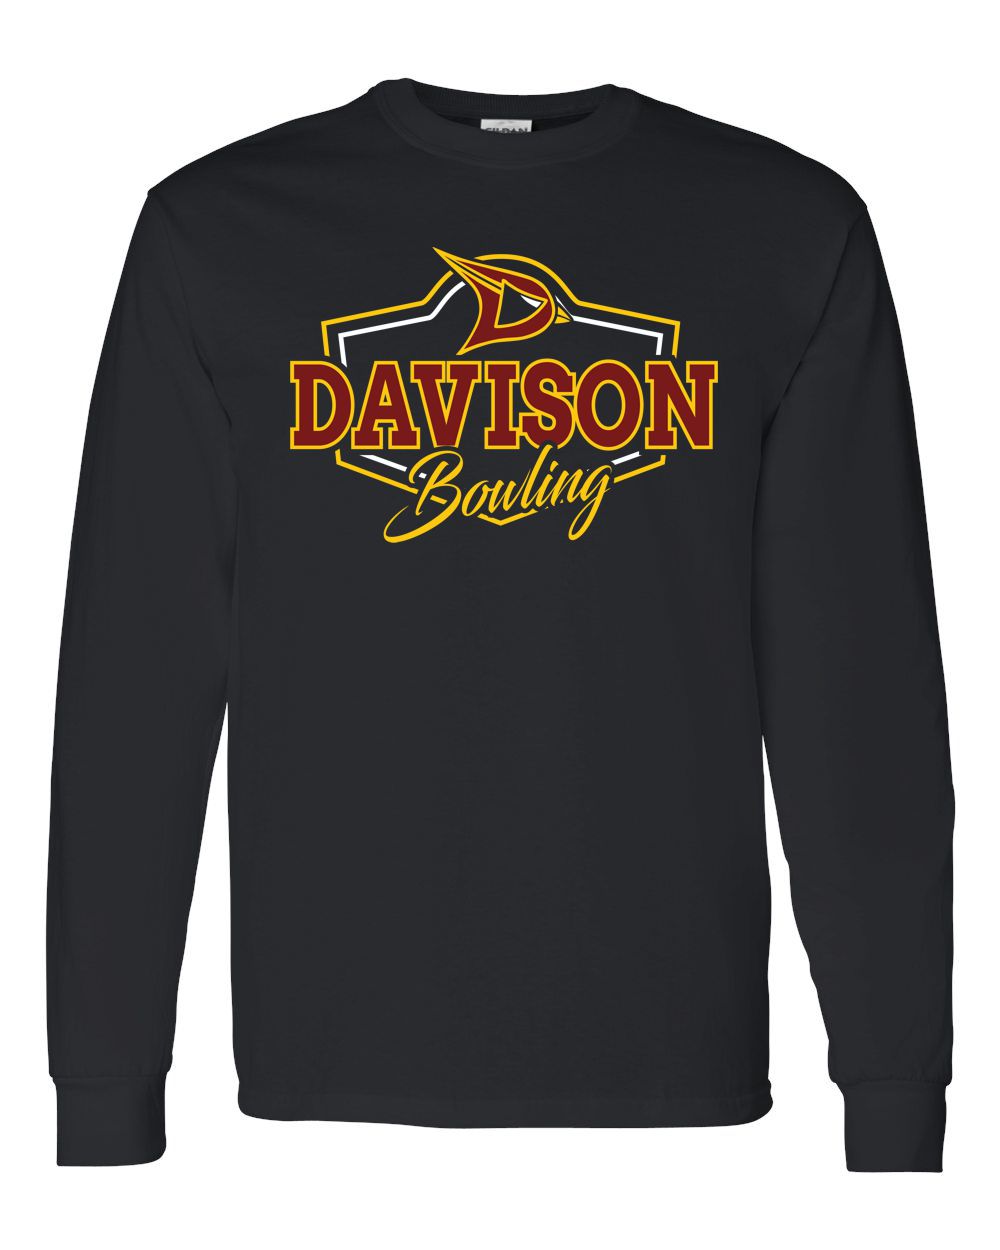 Davison Bowling Long Sleeve Shirt